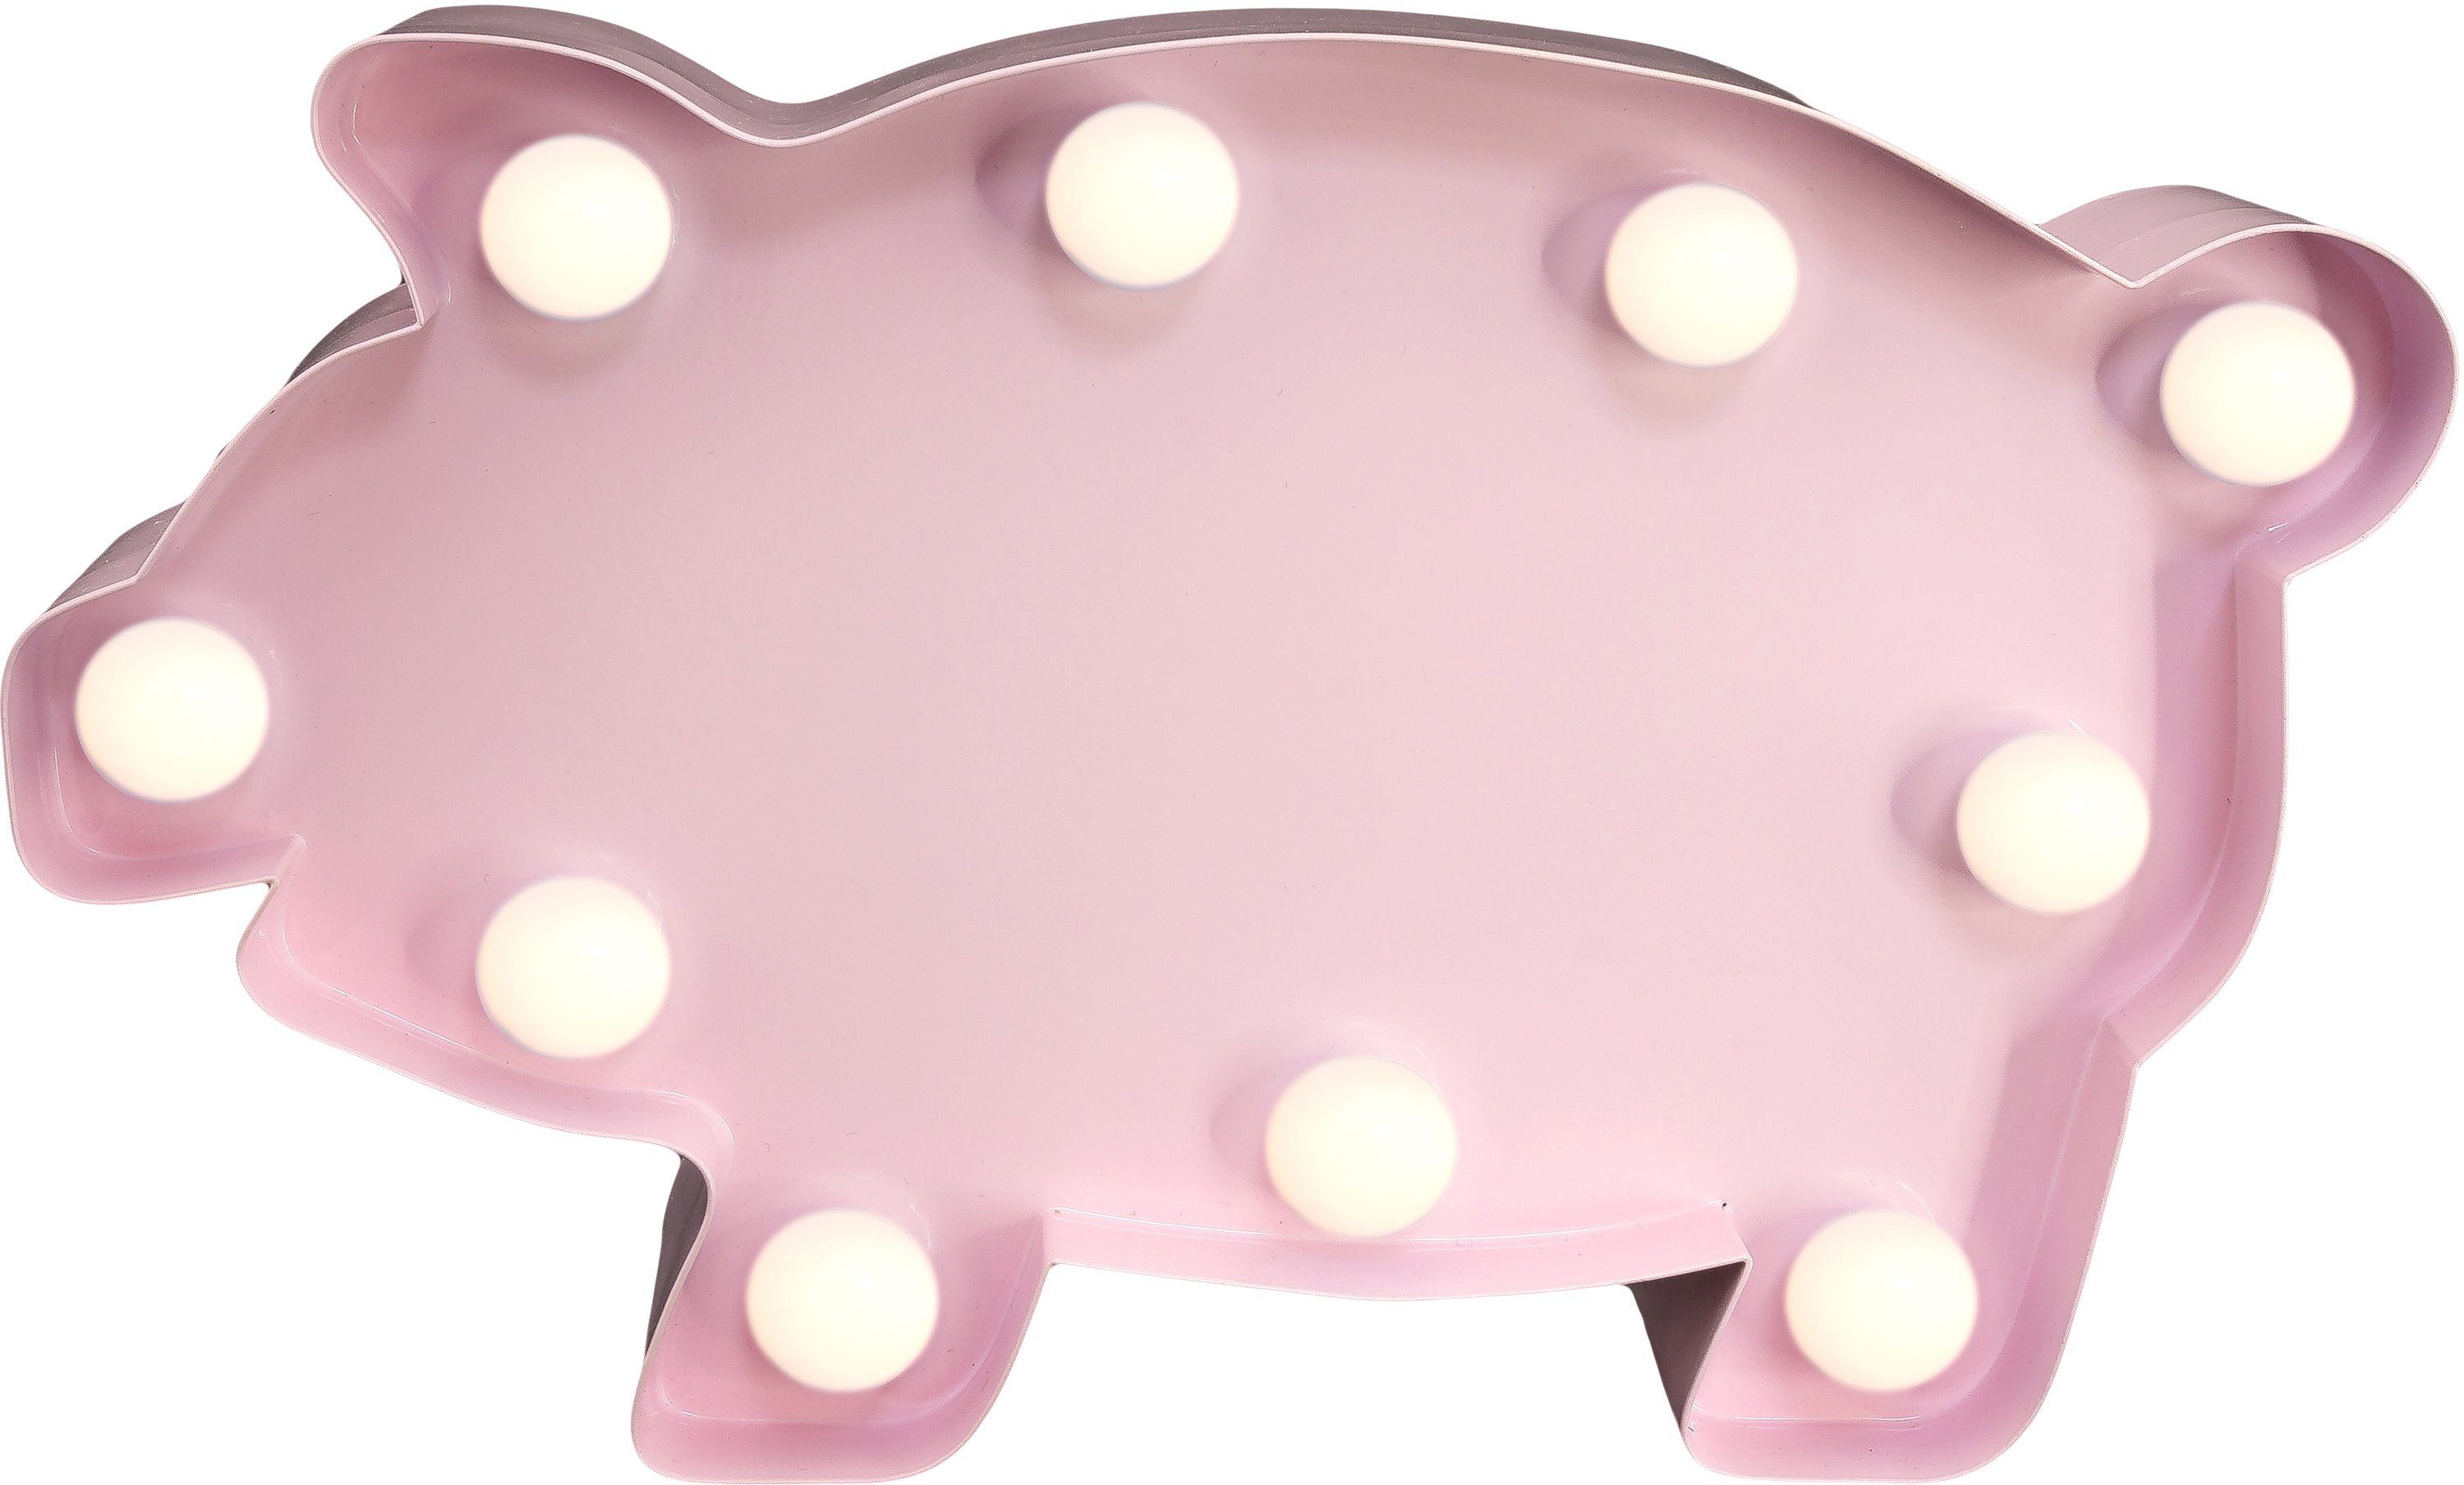 fest Pig mit LED integriert, LEDs MARQUEE festverbauten Pig, Warmweiß, Wandlampe, Dekolicht - LIGHTS 10 Tischlampe LED cm 23x14